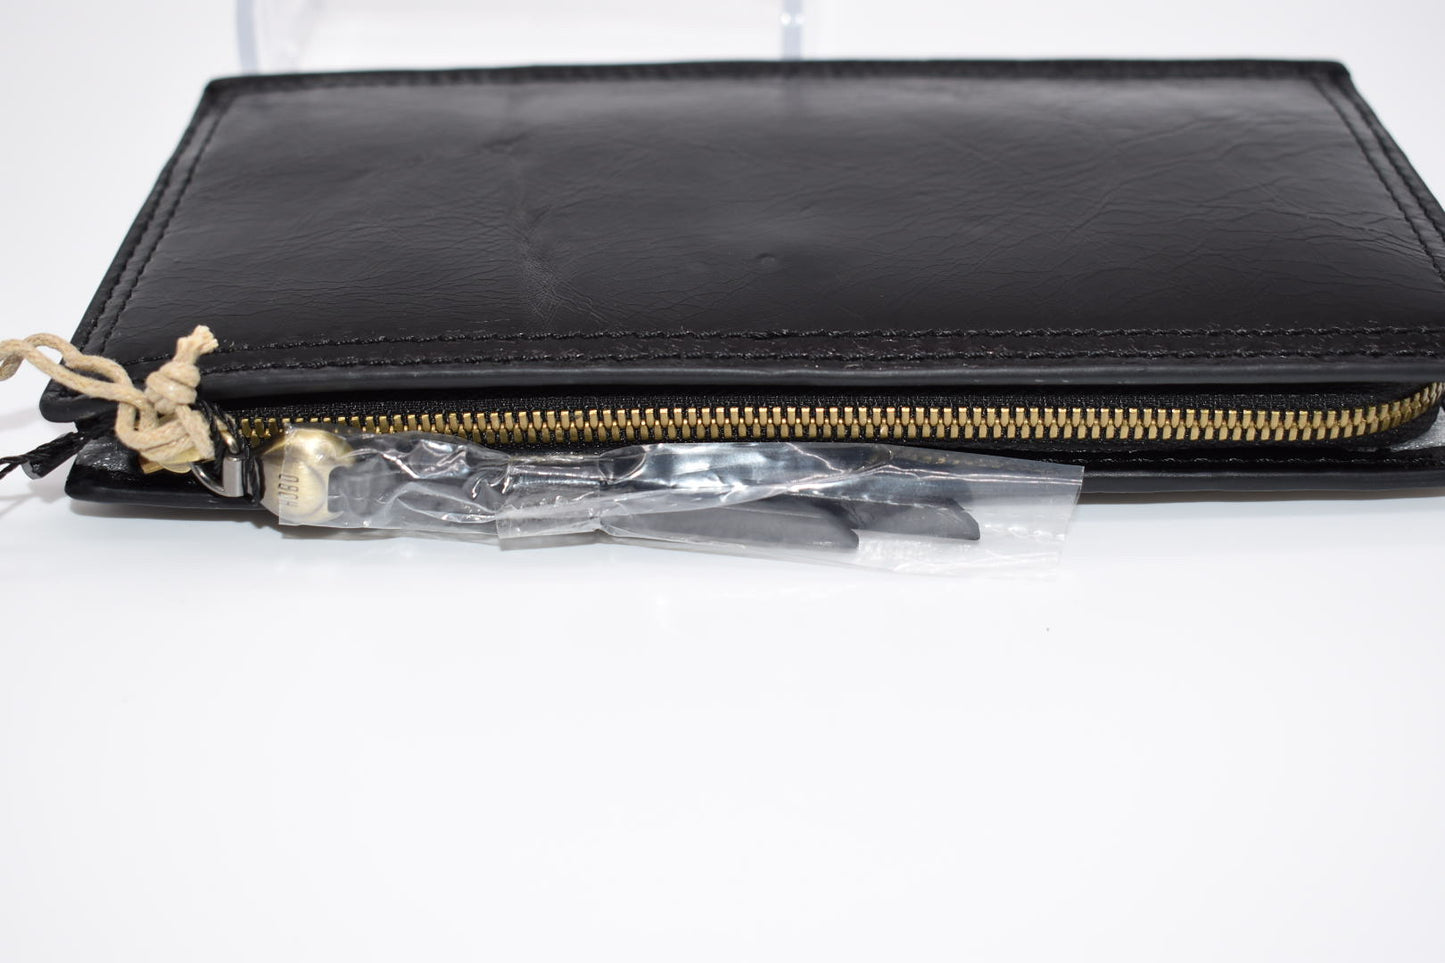 HOBO Gracie Leather Wallet in Black